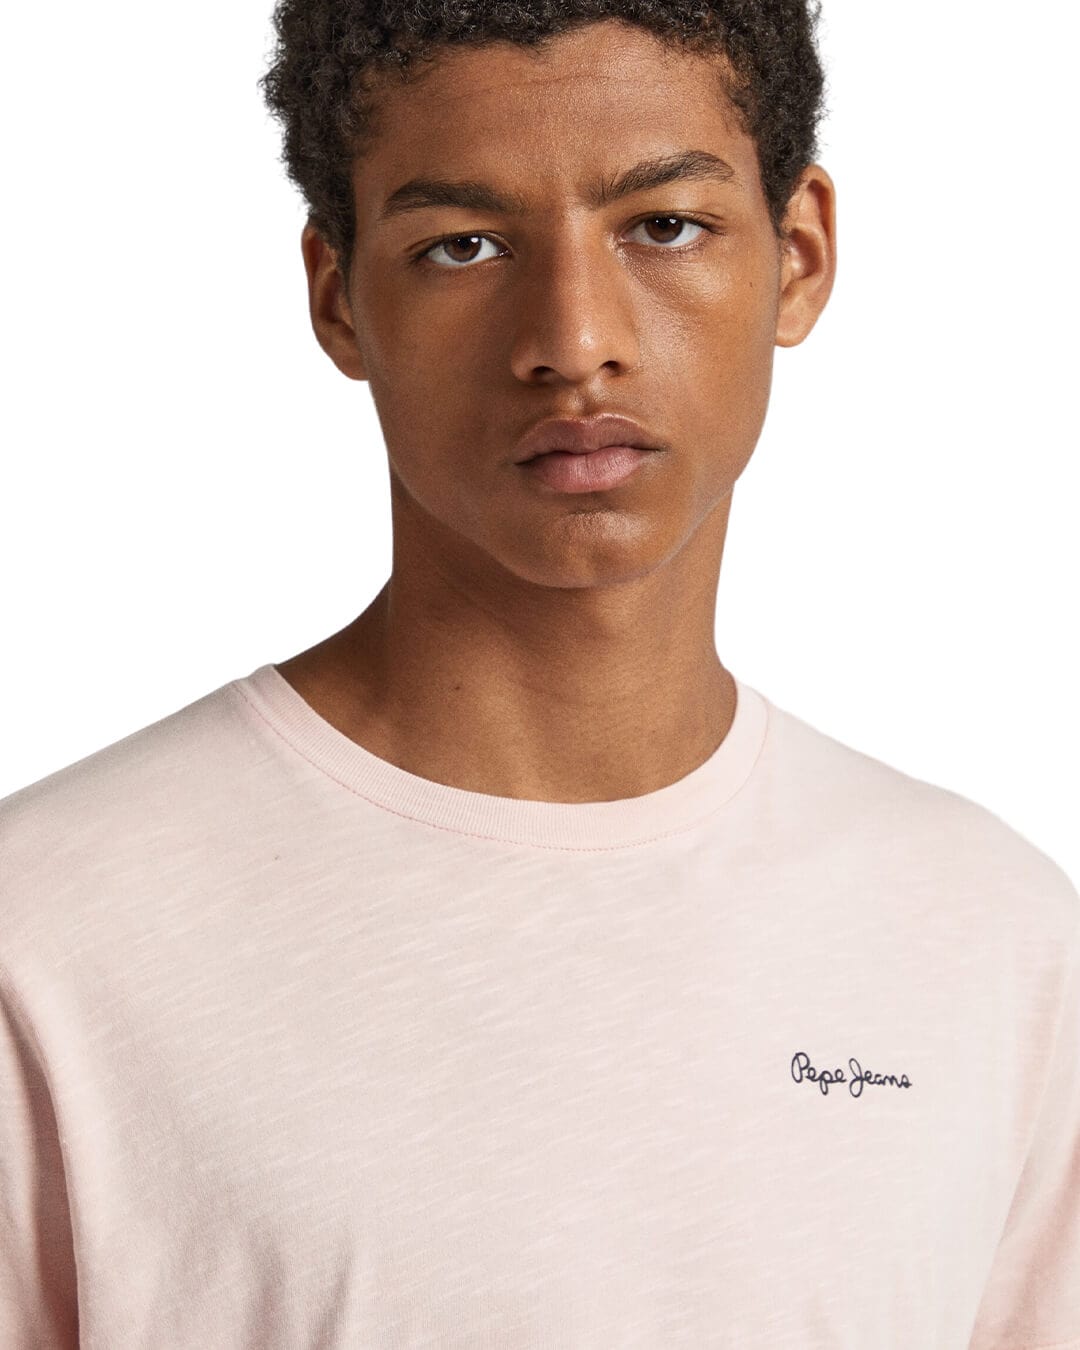 Pepe Jeans Wiltshirte Pink T-Shirt | Bortex - Bortex Fine Tailoring